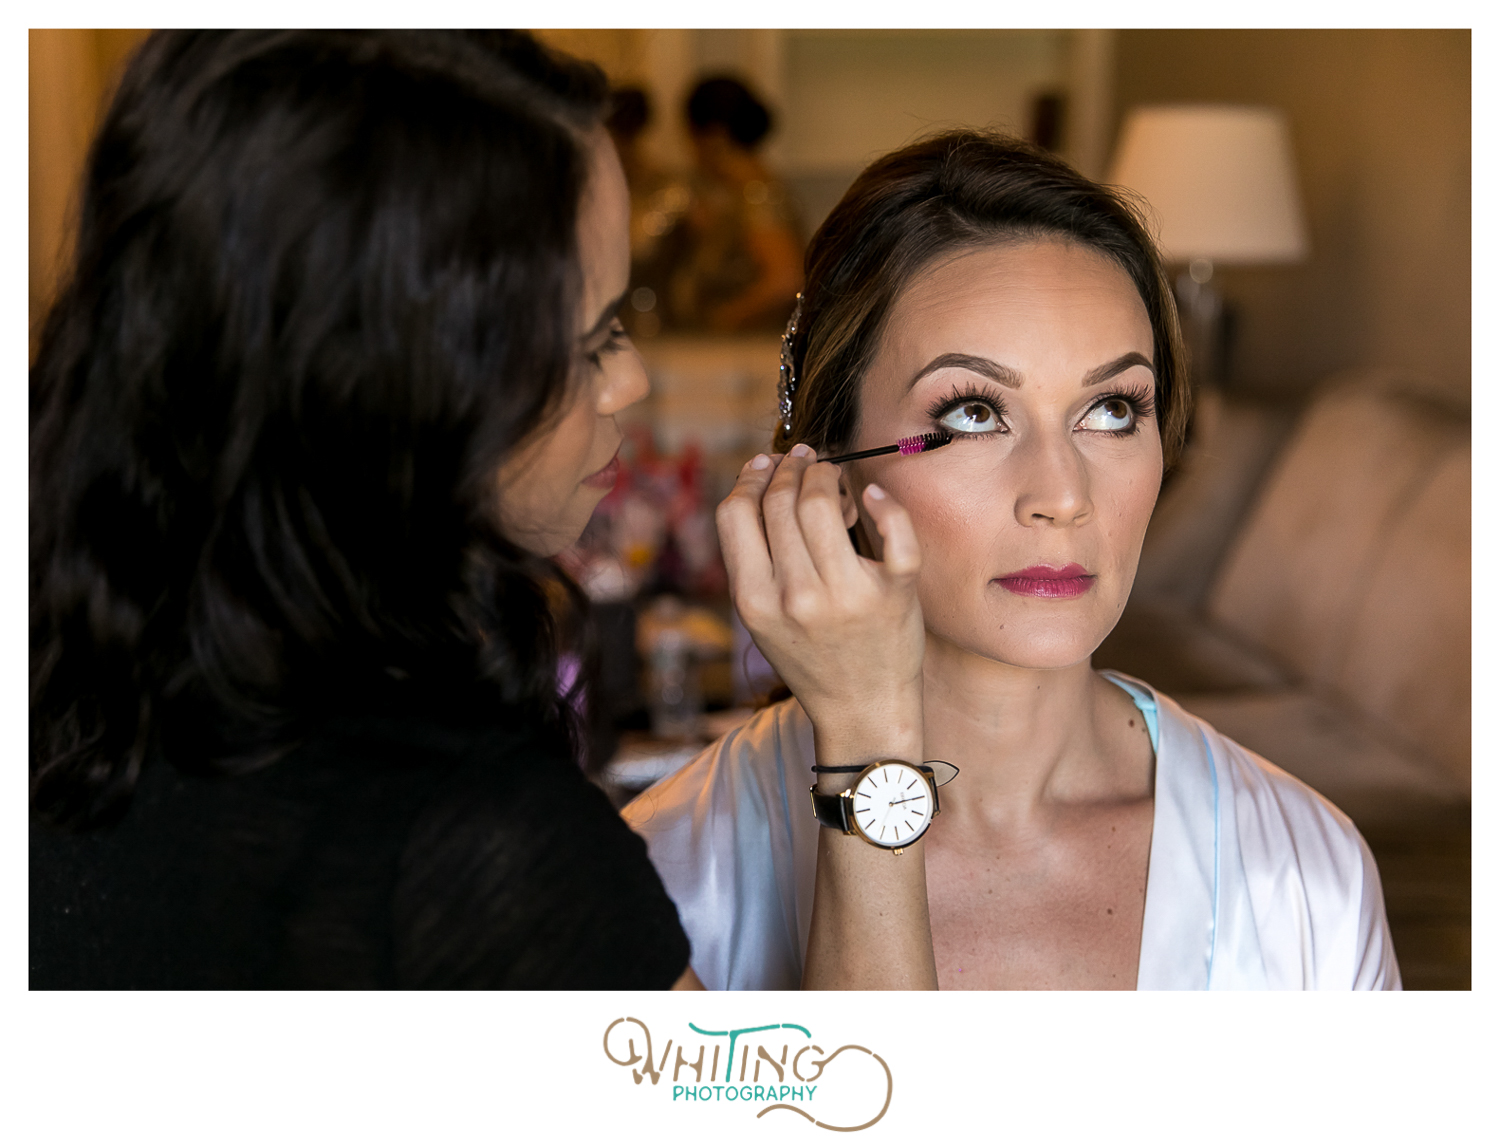 GARINEH ASHJIAN of Glamour Cosmetics applying makeup to a bride at the Fairmont Copley Plaza Boston